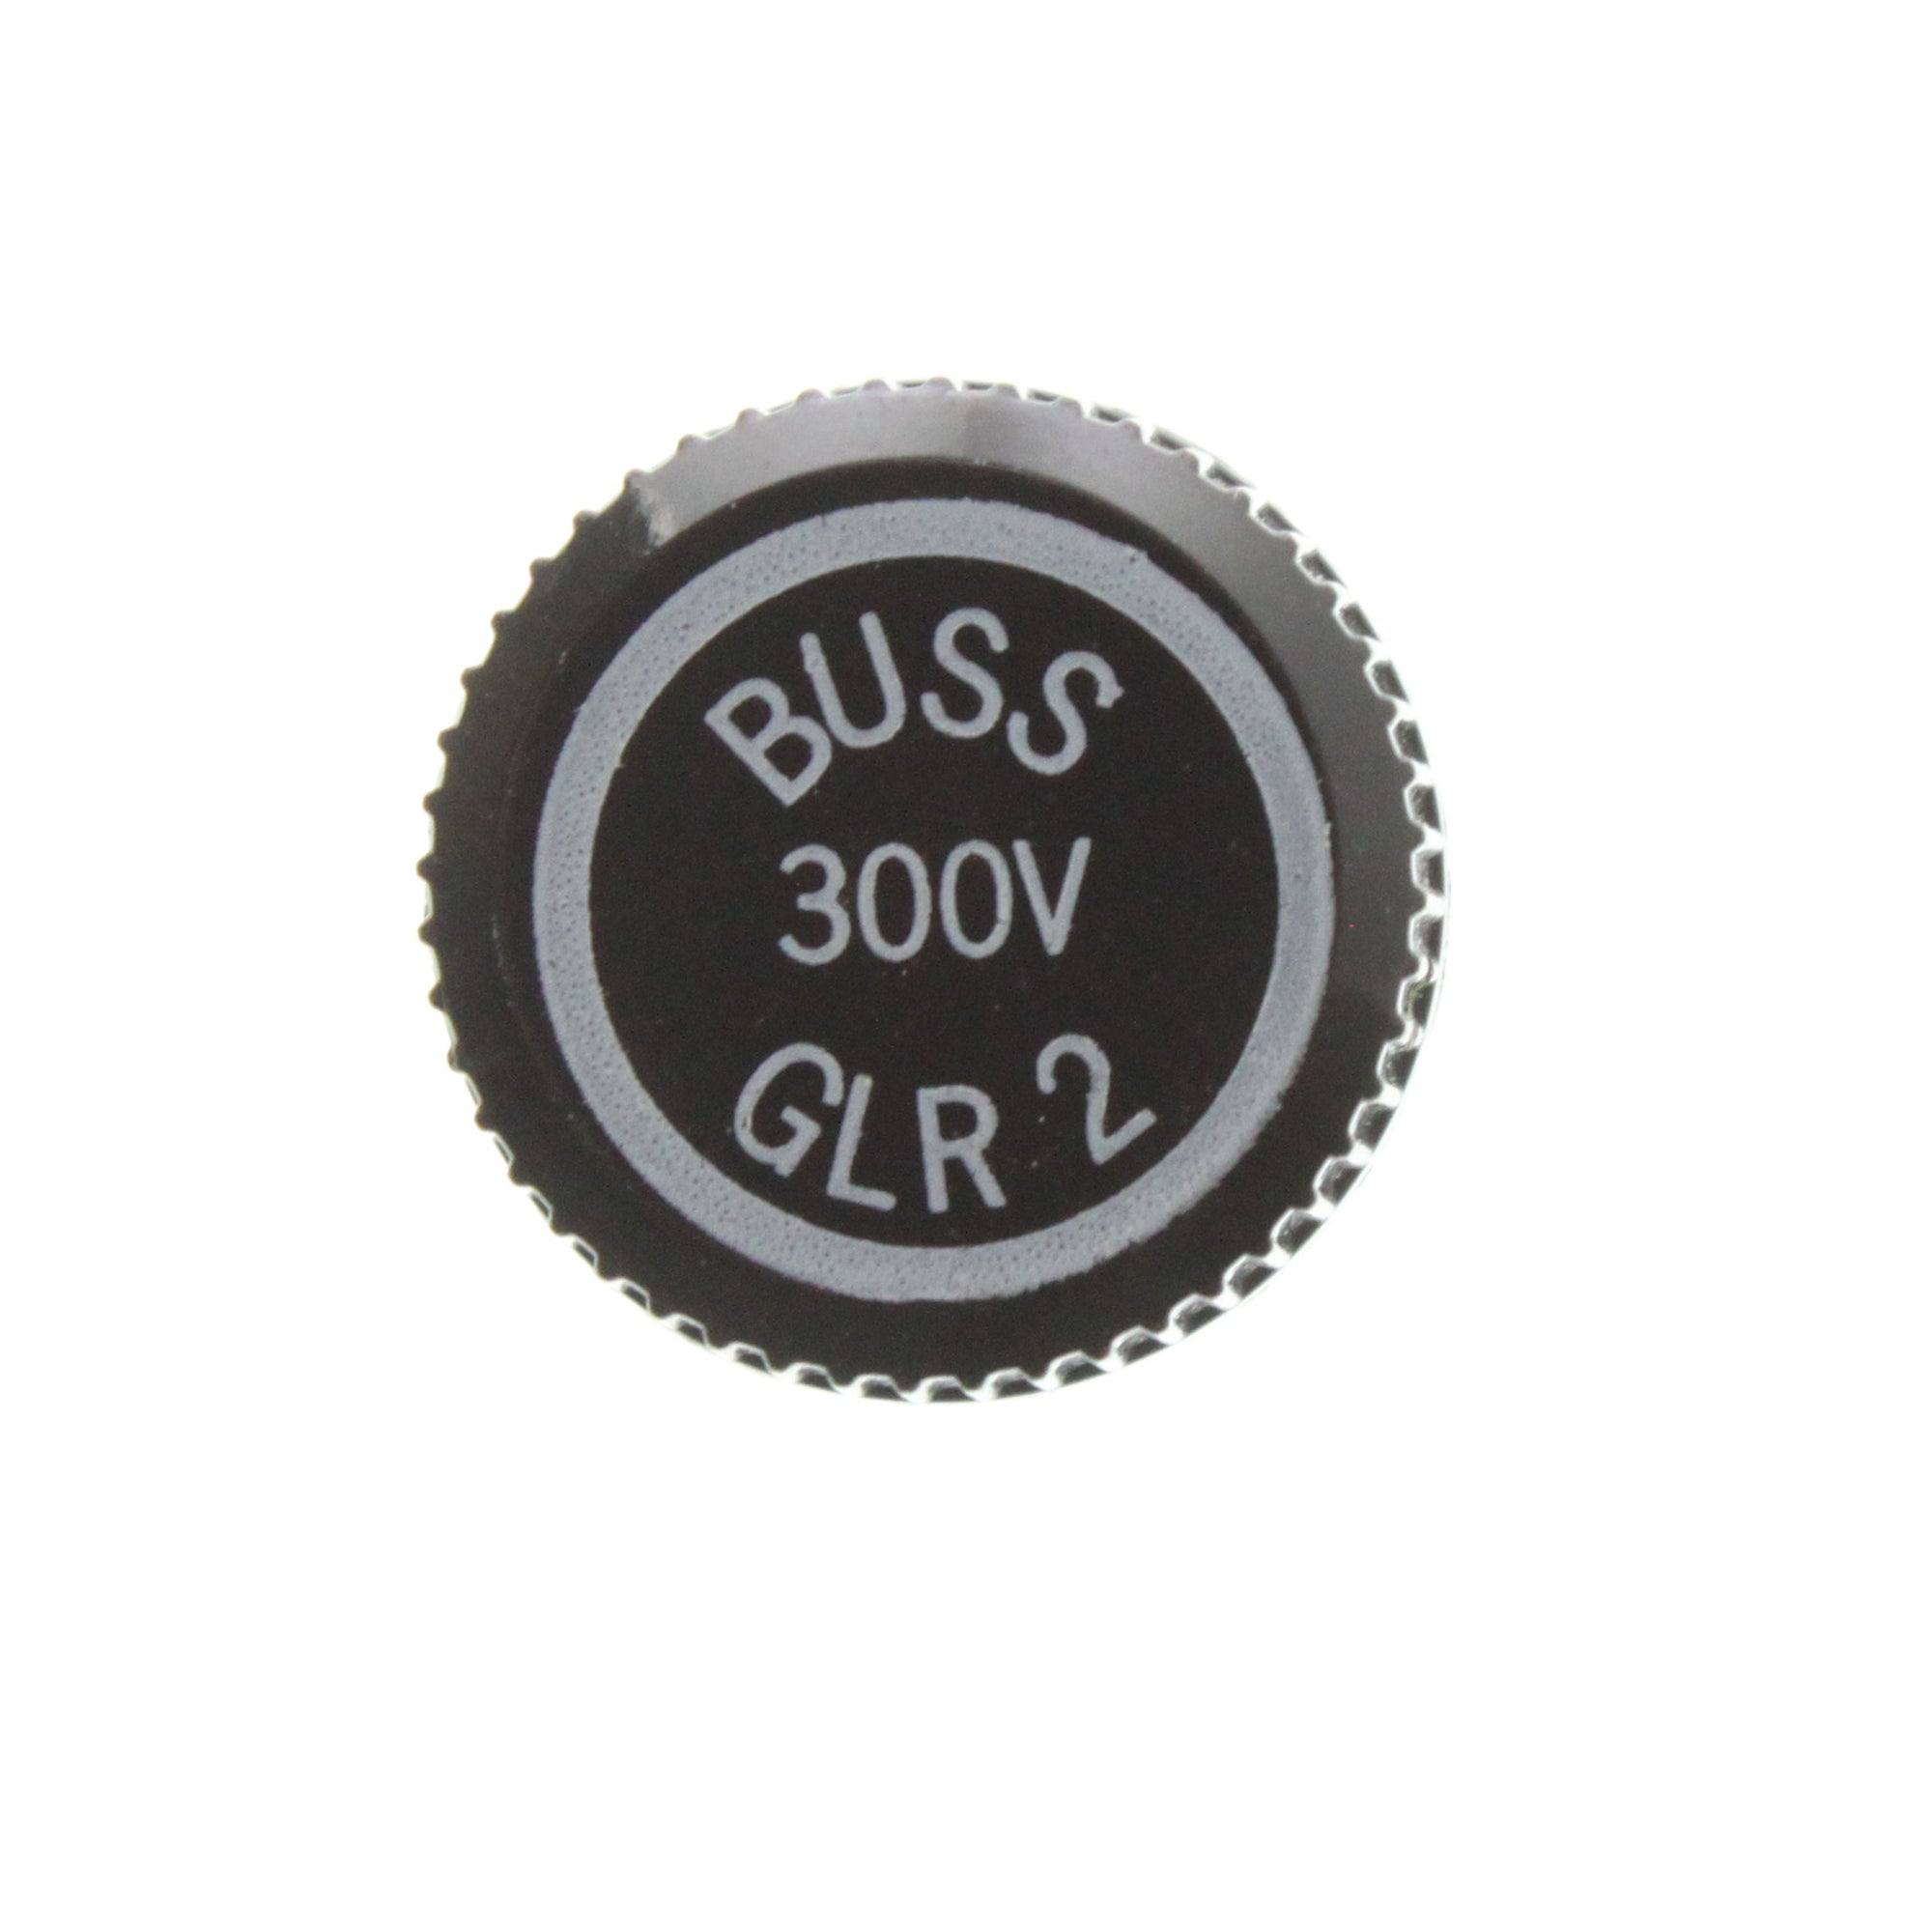 Bussman, BUSSMAN GLR-2 NON-REJECTING FAST-ACTING INLINE FUSE 300-VOLT, 2-AMP